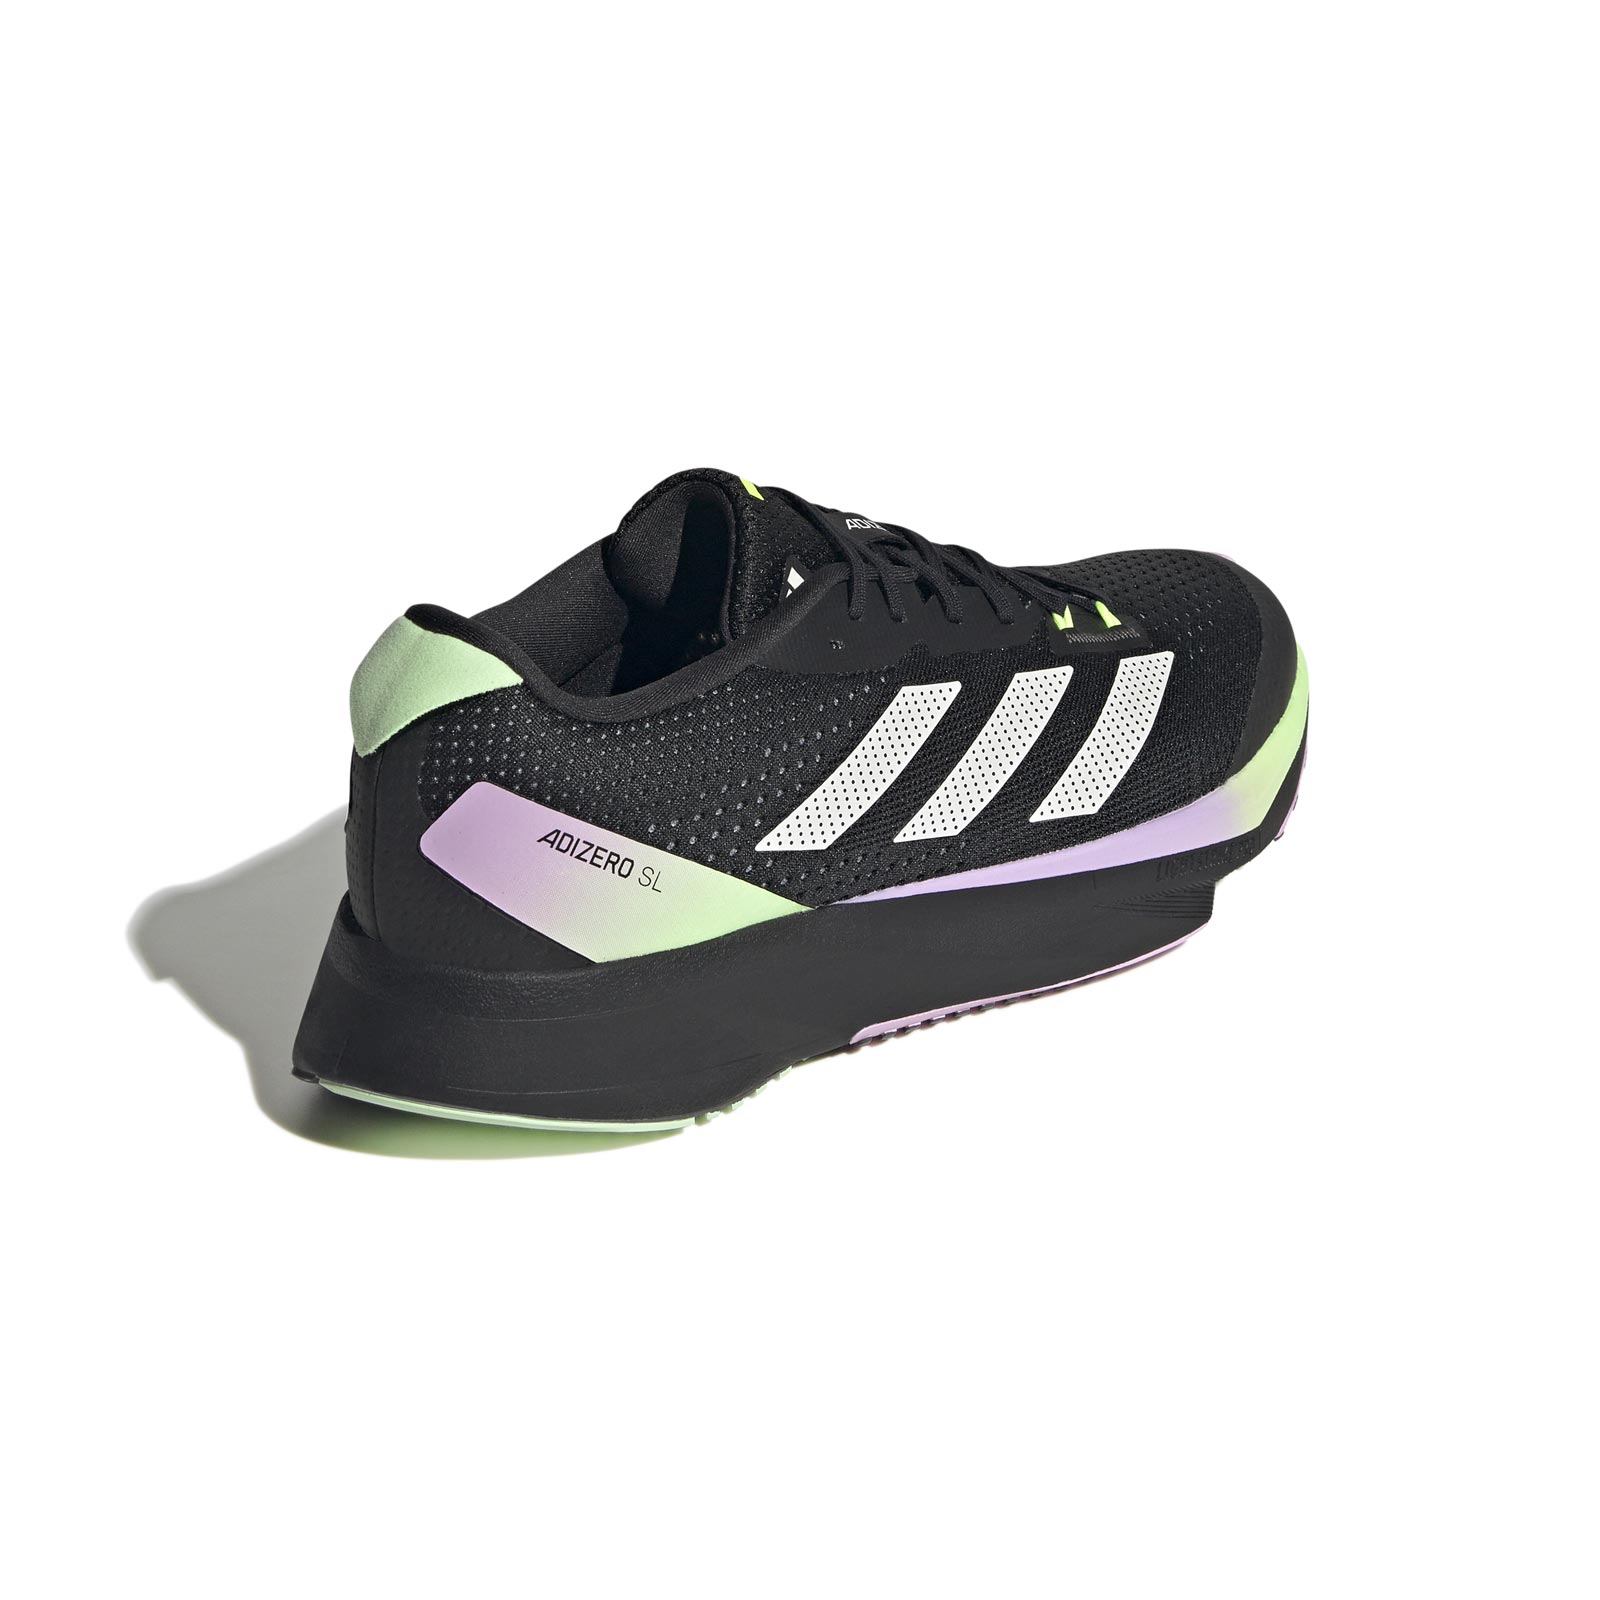 adidas Adizero SL Mens Running Shoes